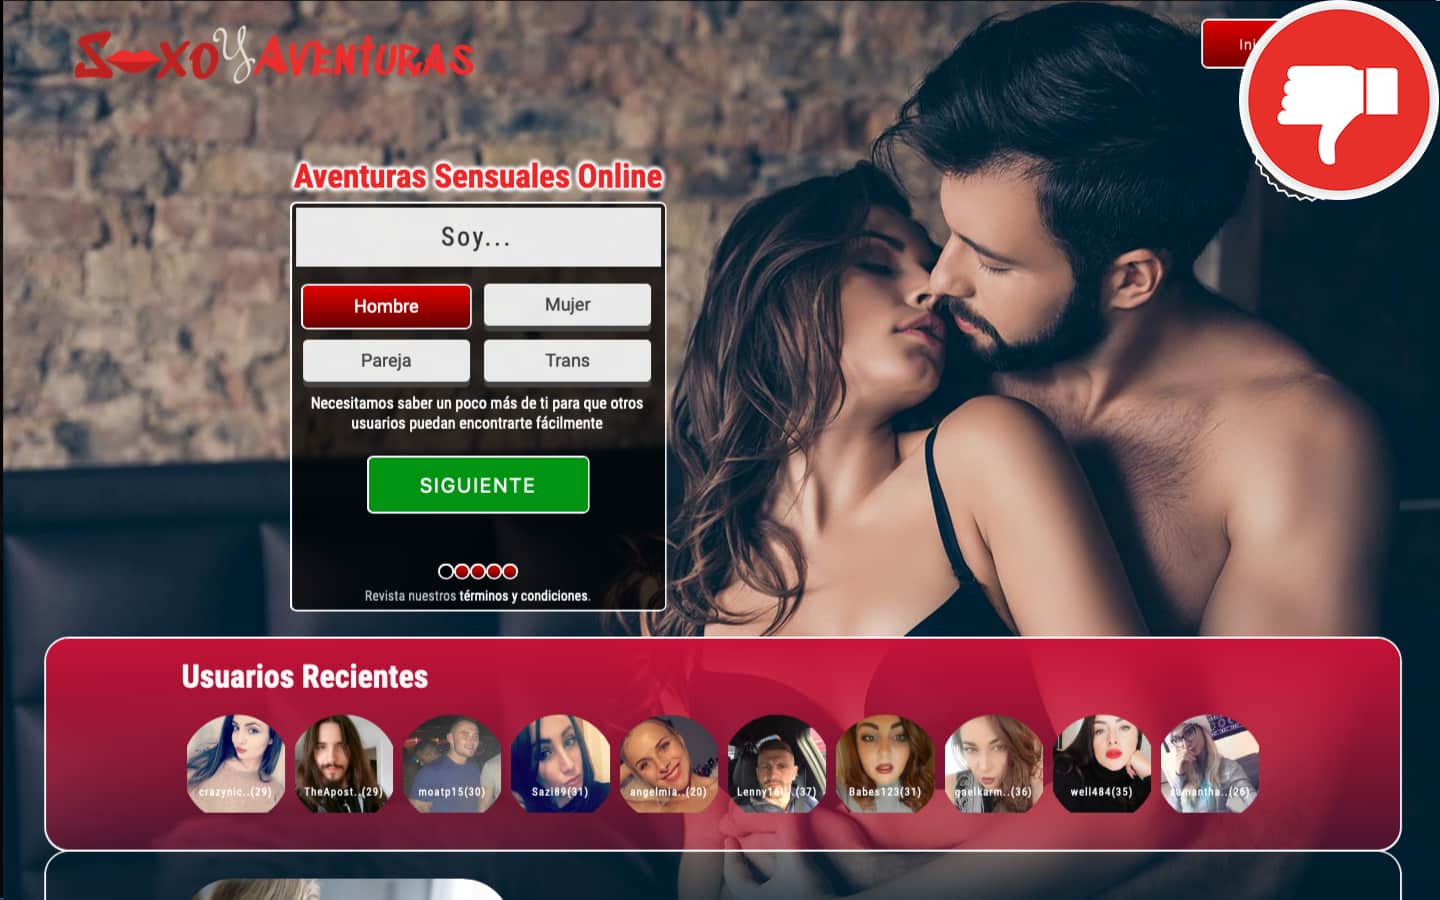 SexoYAventuras.com Abzocke